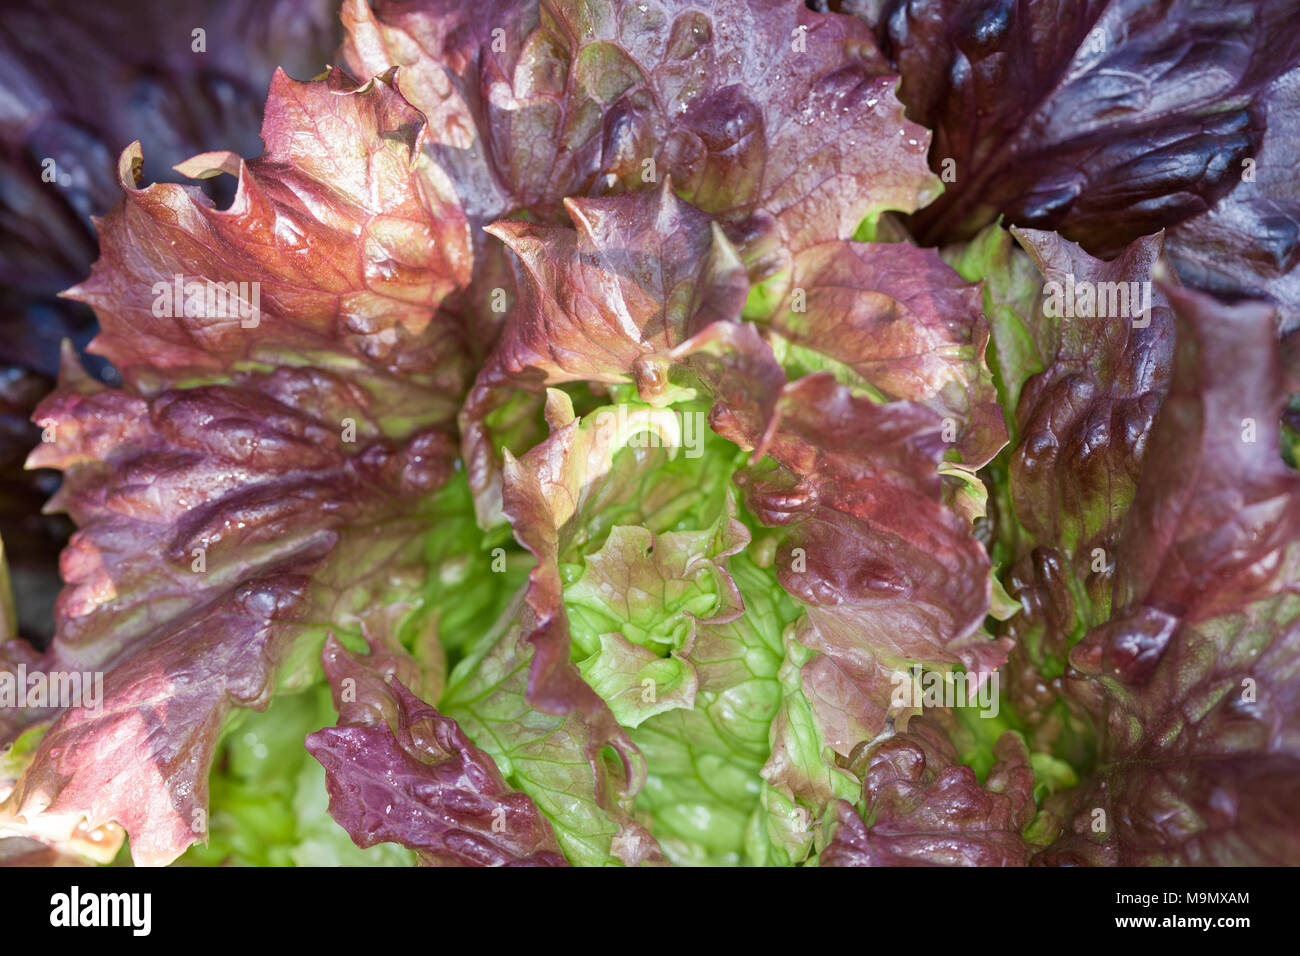 'Mohikan' Lettuce, Huvudsallat (Lactuca sativa var. capitata crispum) Stock Photo